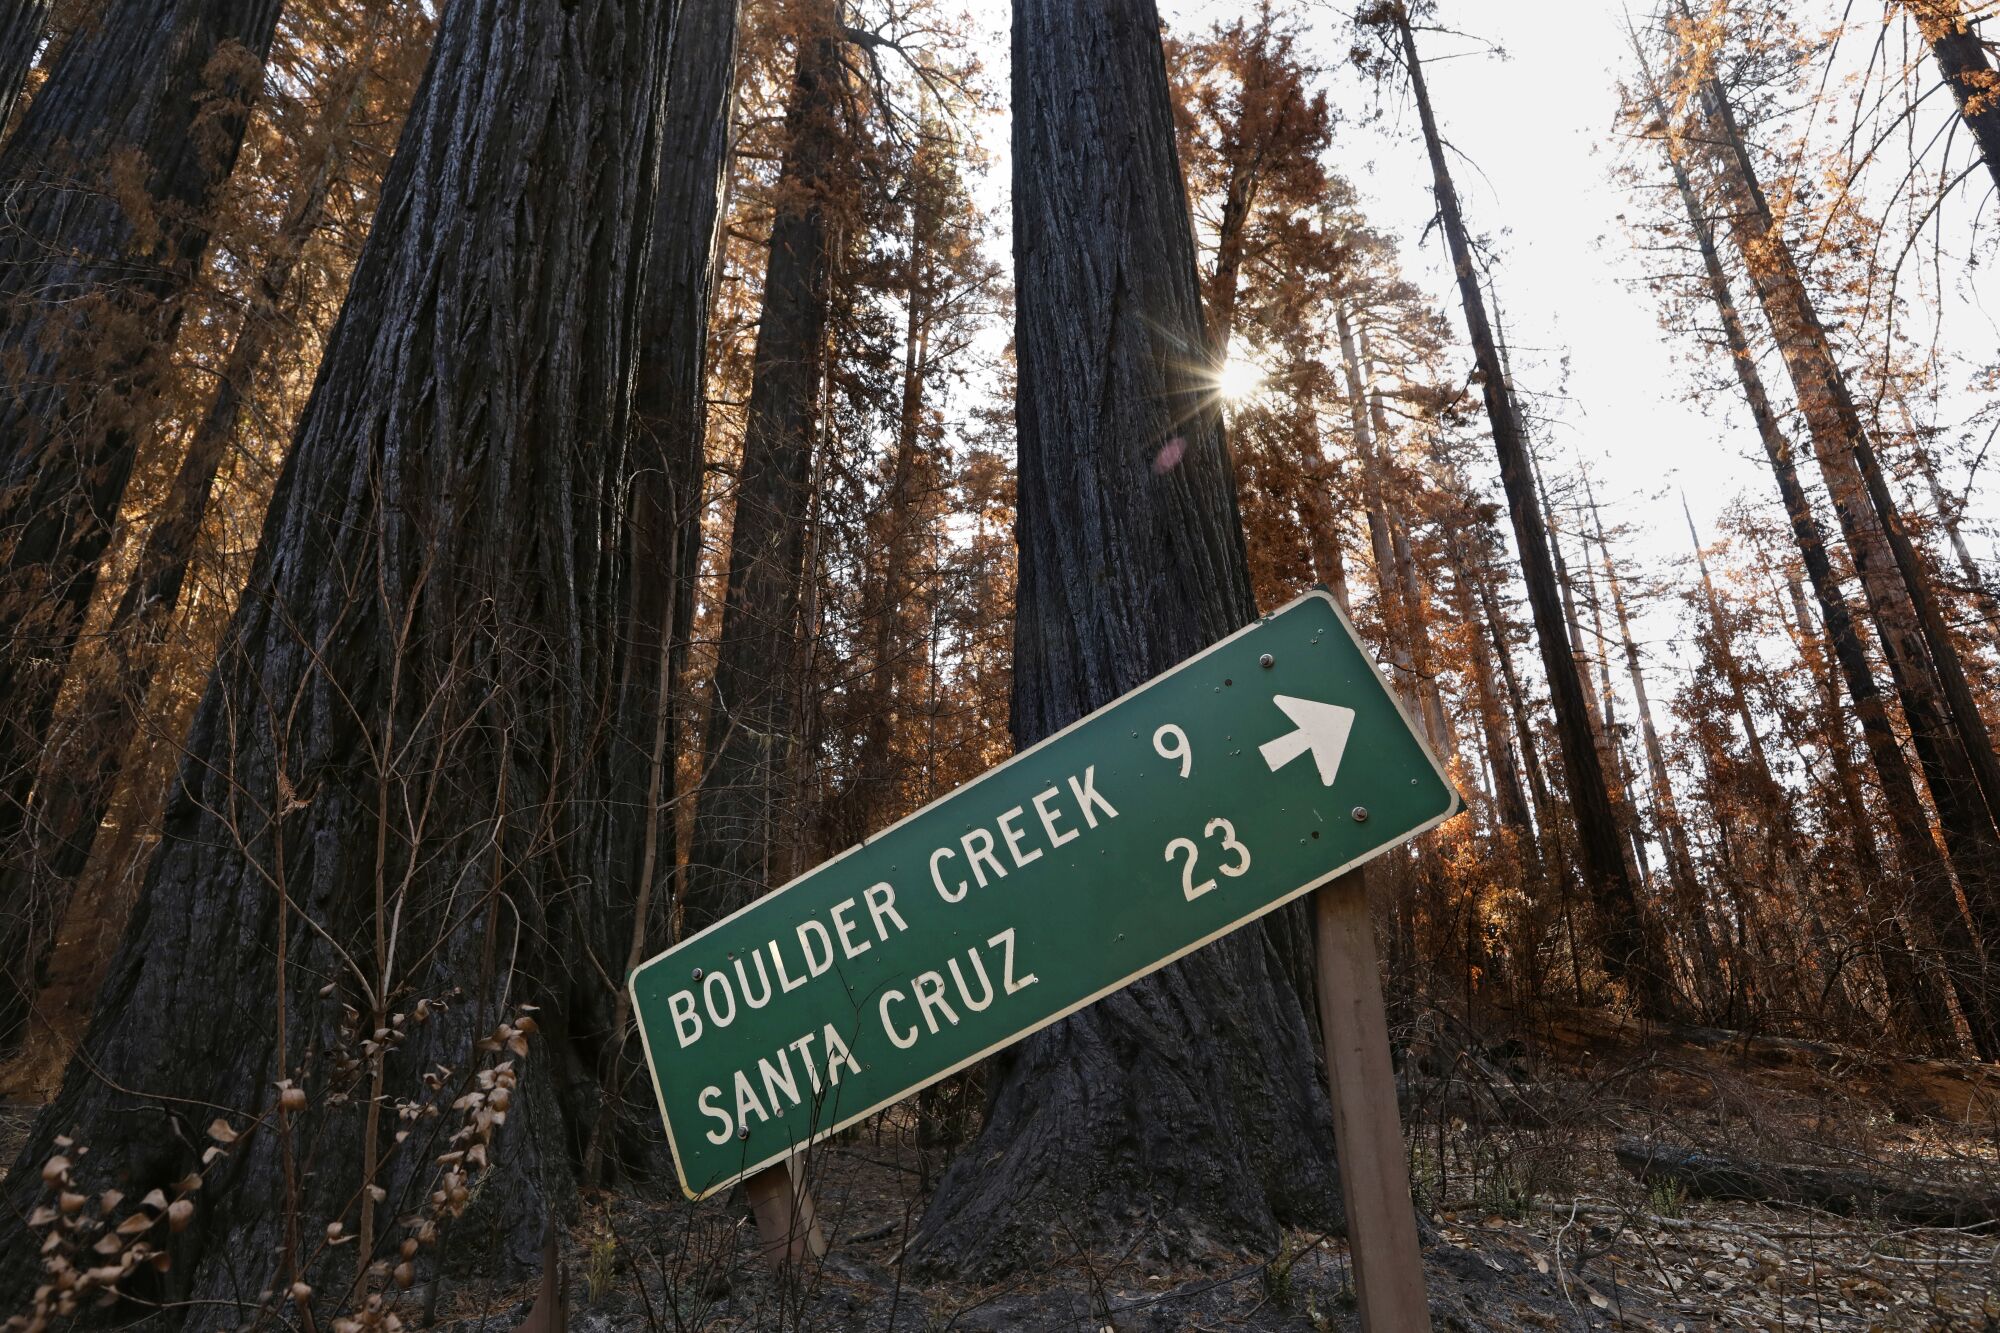 A road sign hangs at a slant amid redwoods.